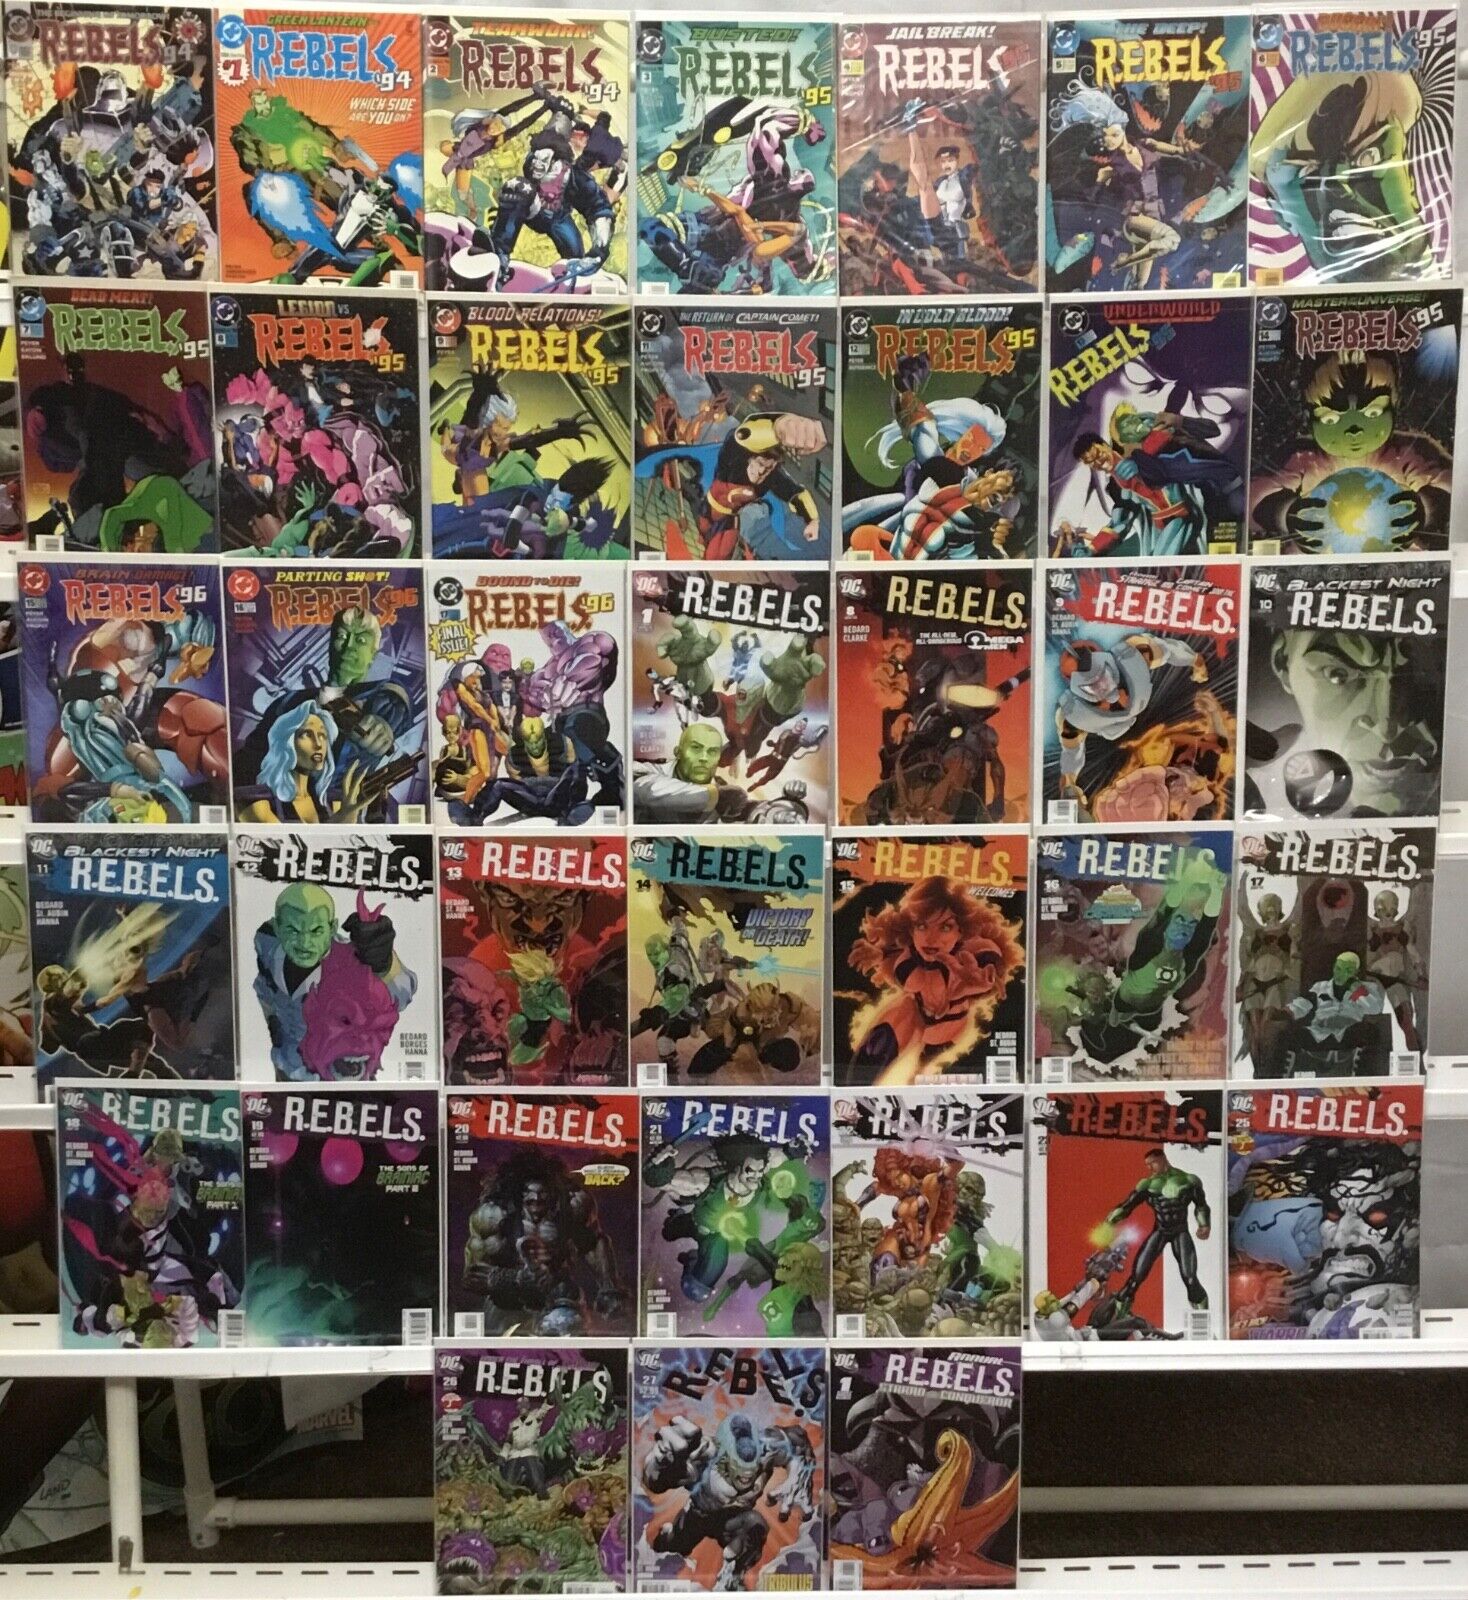 DC Comics R.E.B.E.L.S. Volume 1 & Volume 2 Comic Book Lot of 38 Issues